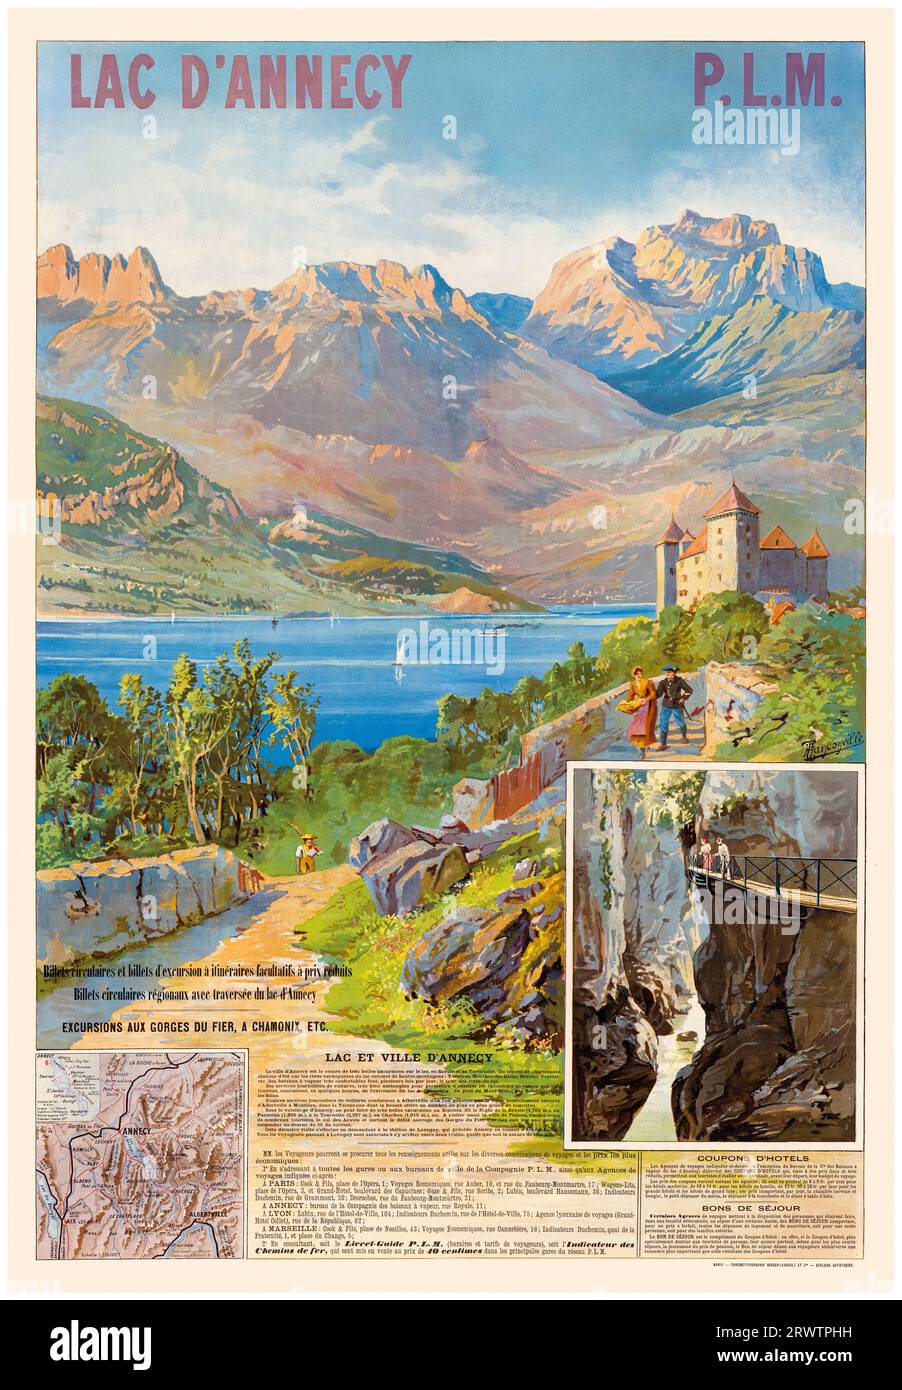 LAC D’Annecy (PLM Railways), poster di viaggi vintage francese, 1890 Foto Stock